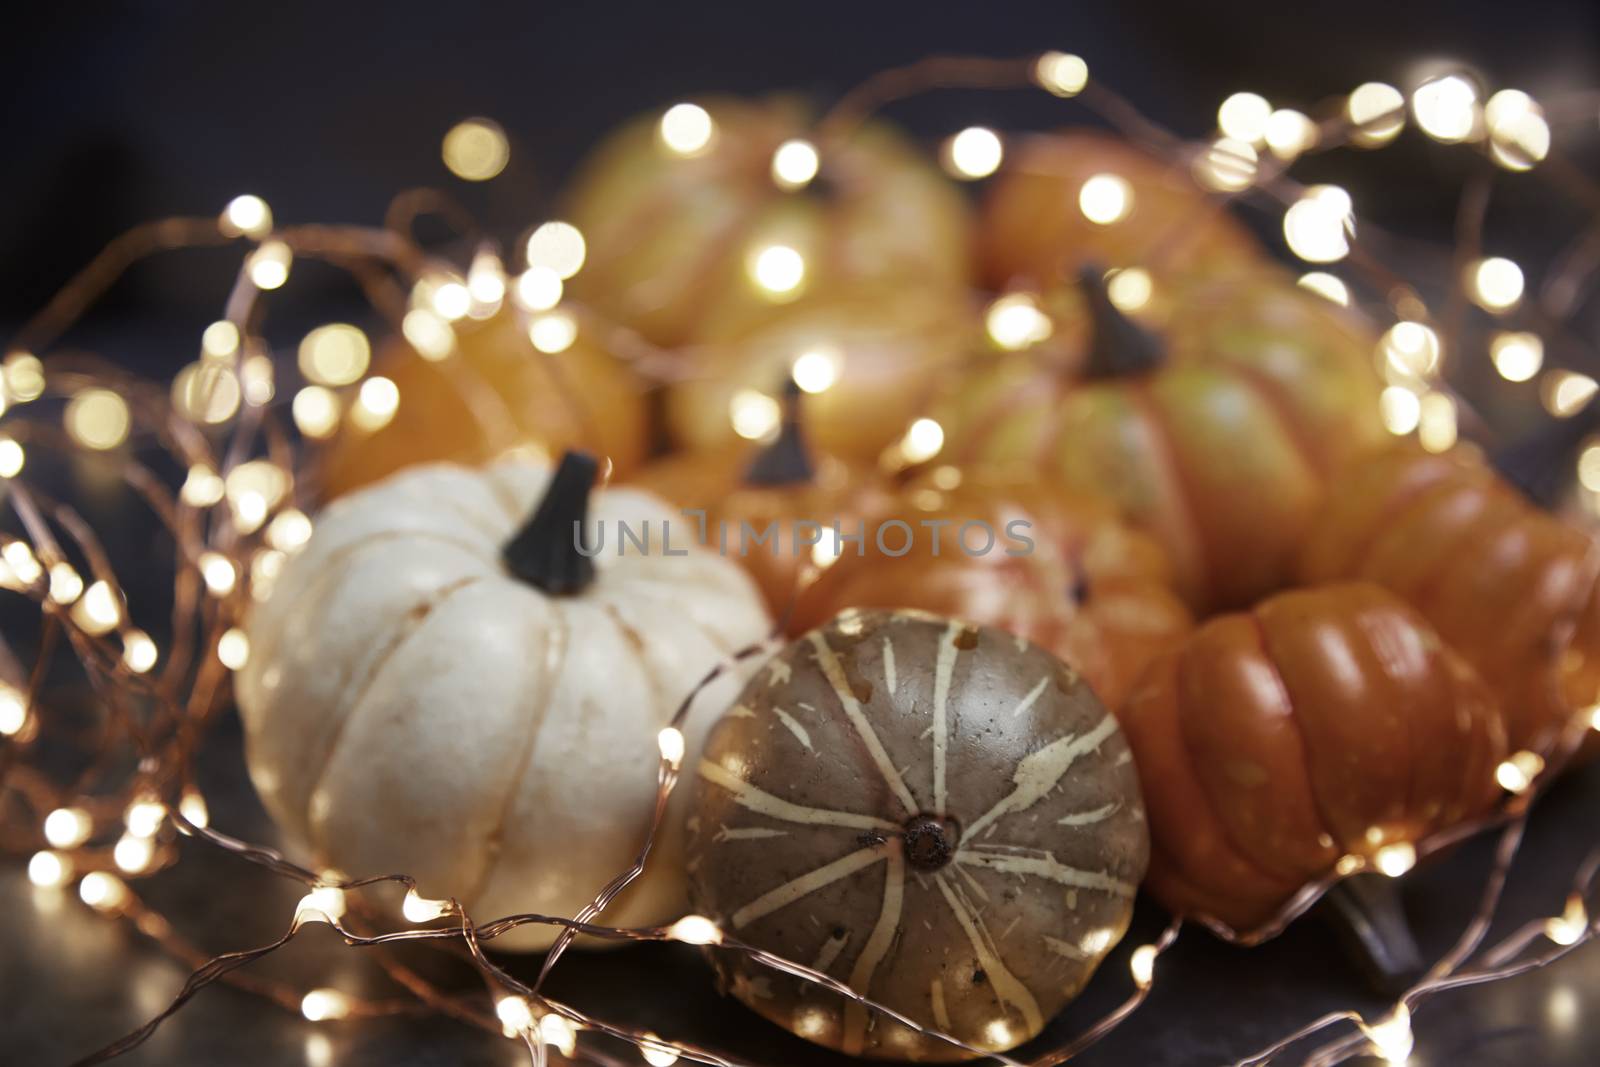 Halloween pumpkins with electric illumination